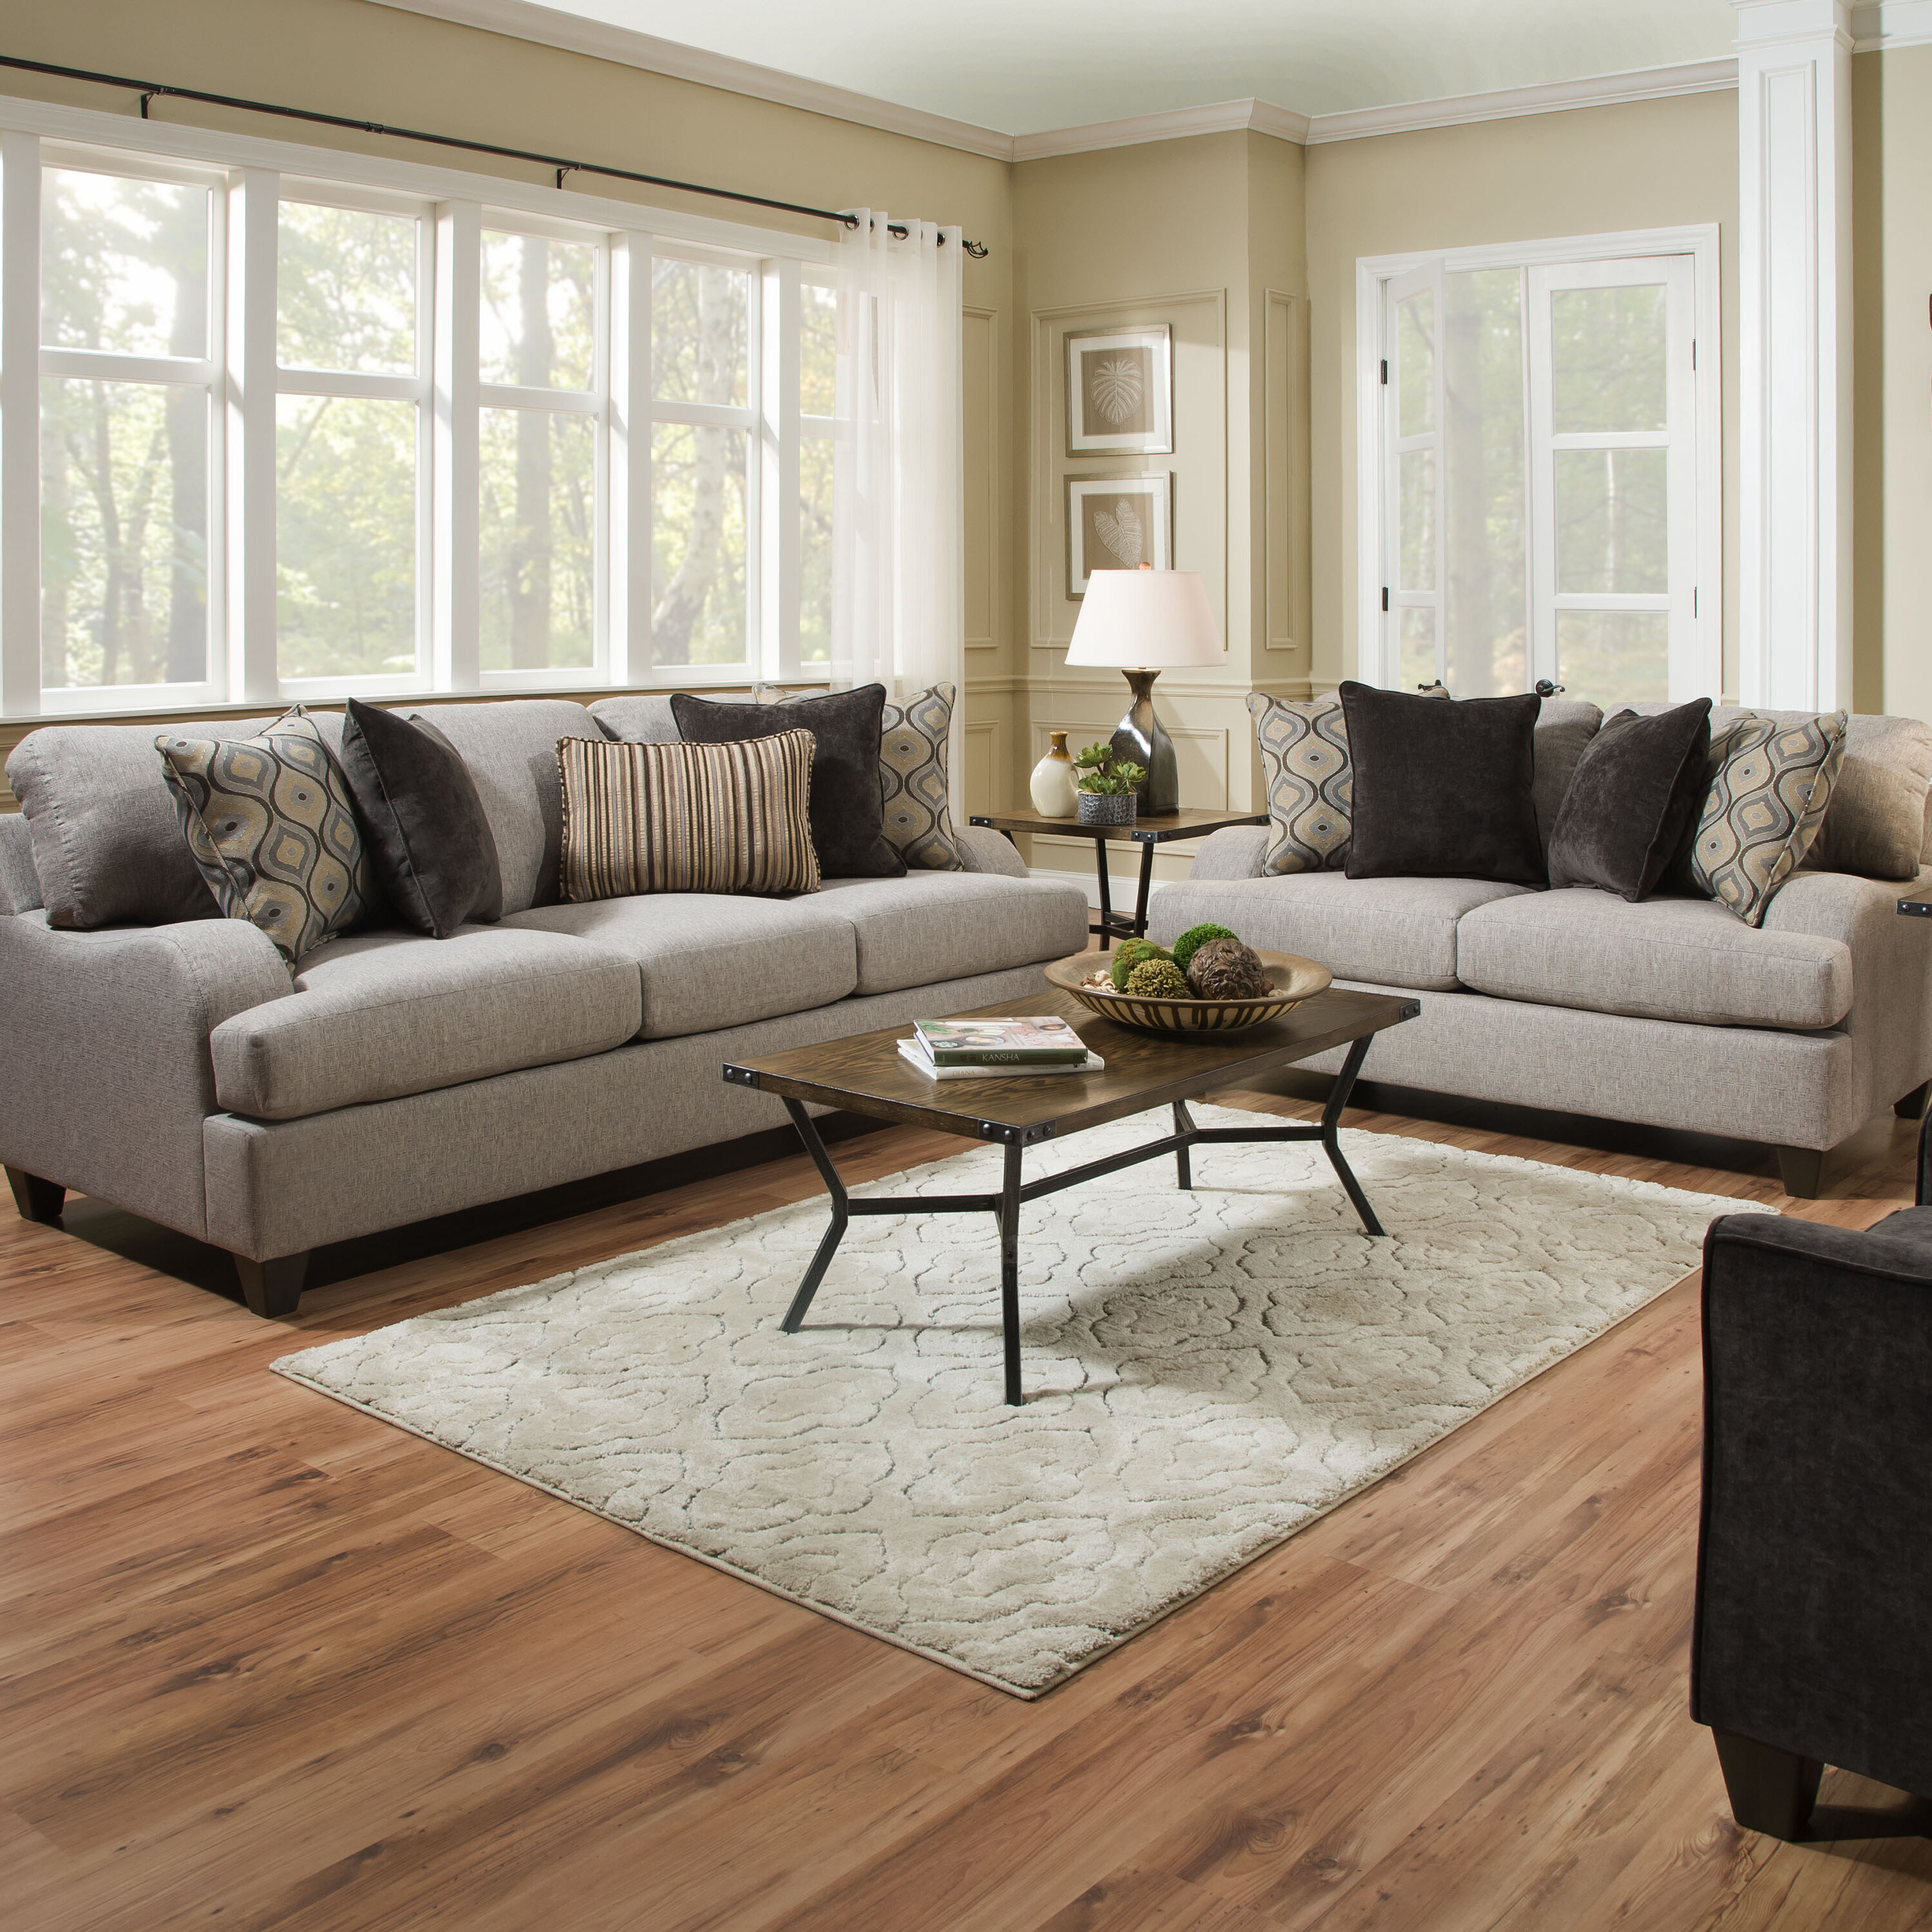 Latitude Run Denijah Configurable Living Room Set Reviews Wayfair